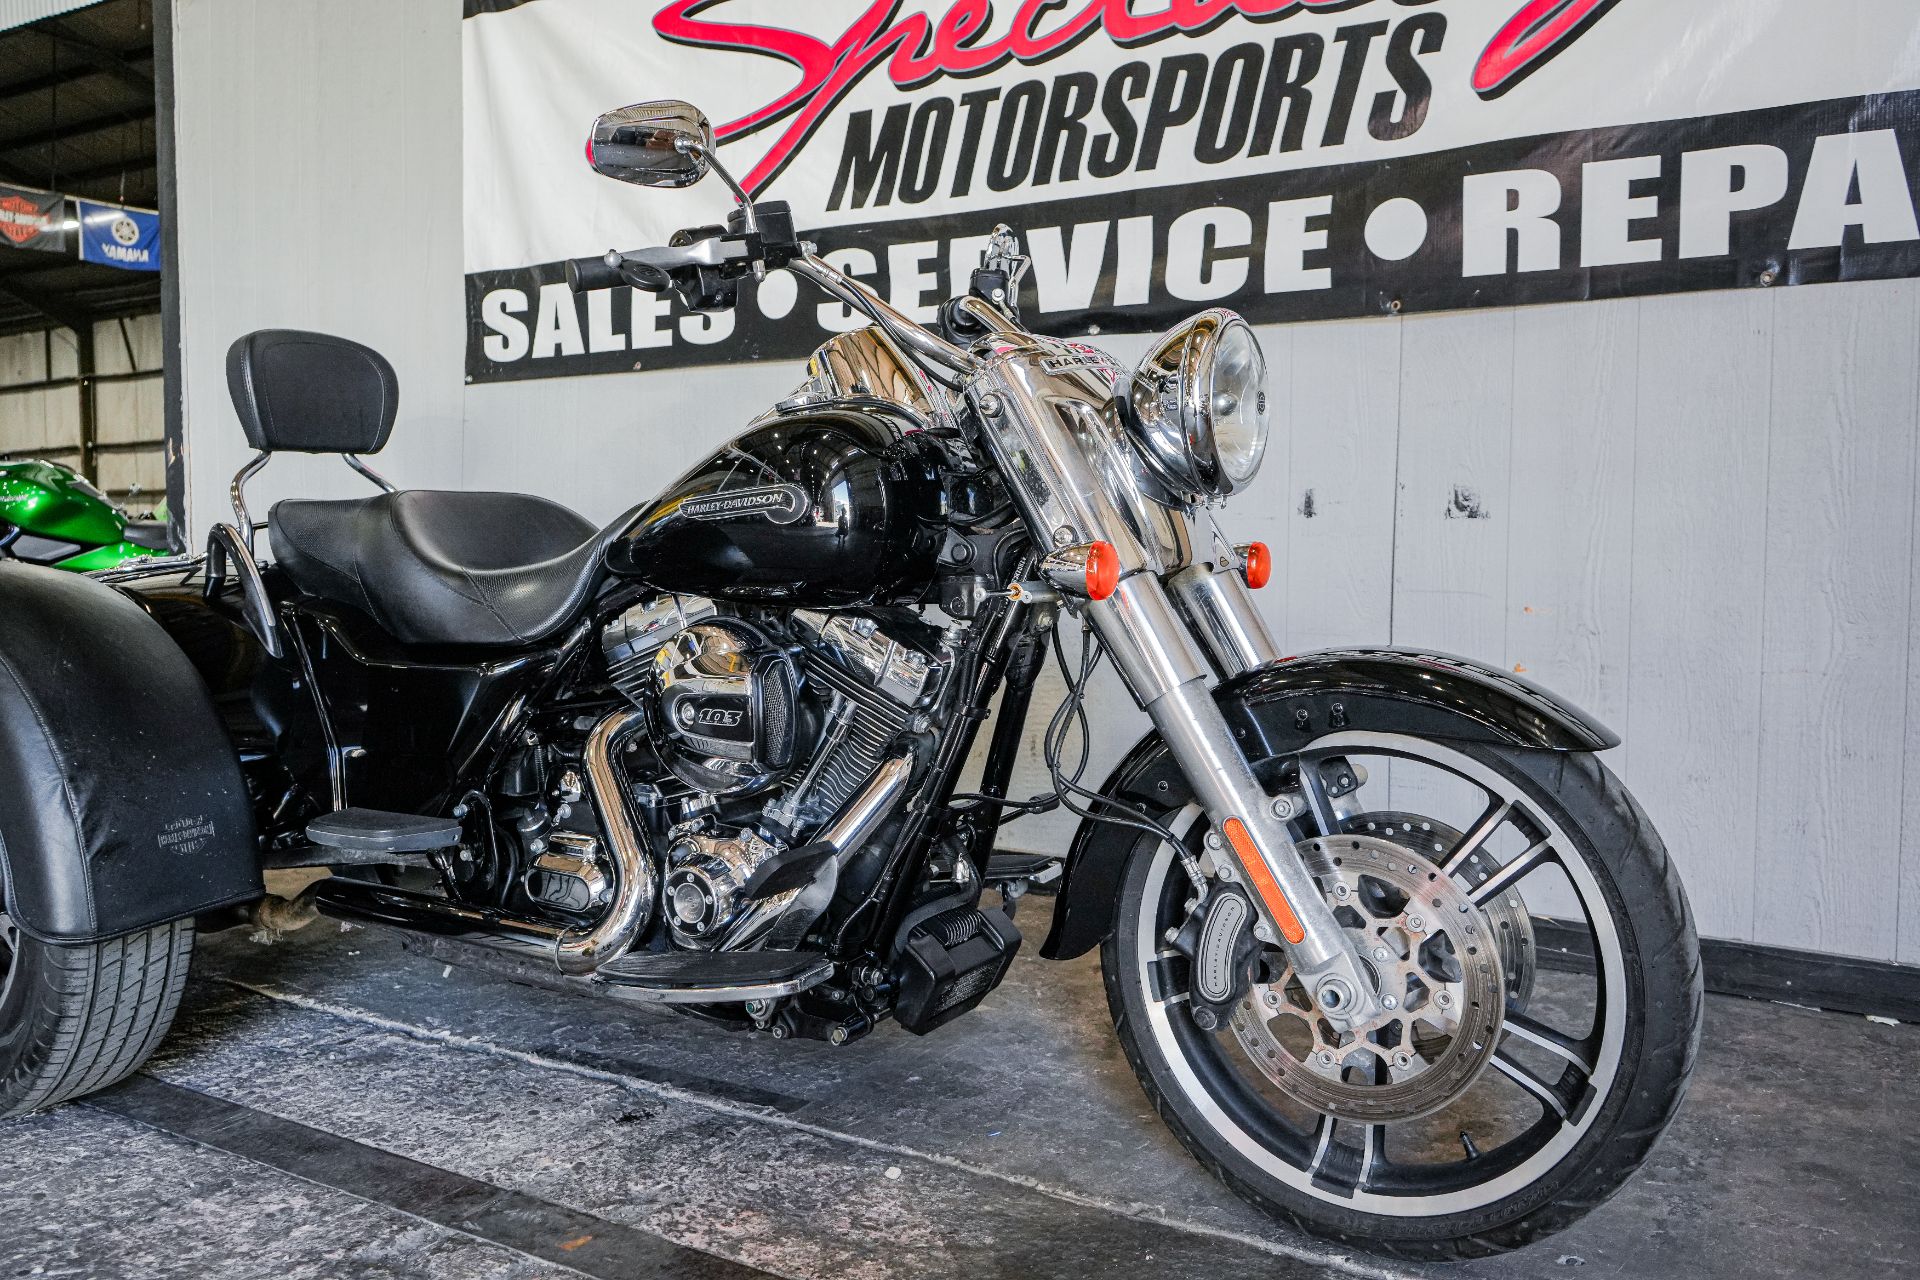 2016 Harley-Davidson Freewheeler™ in Sacramento, California - Photo 3